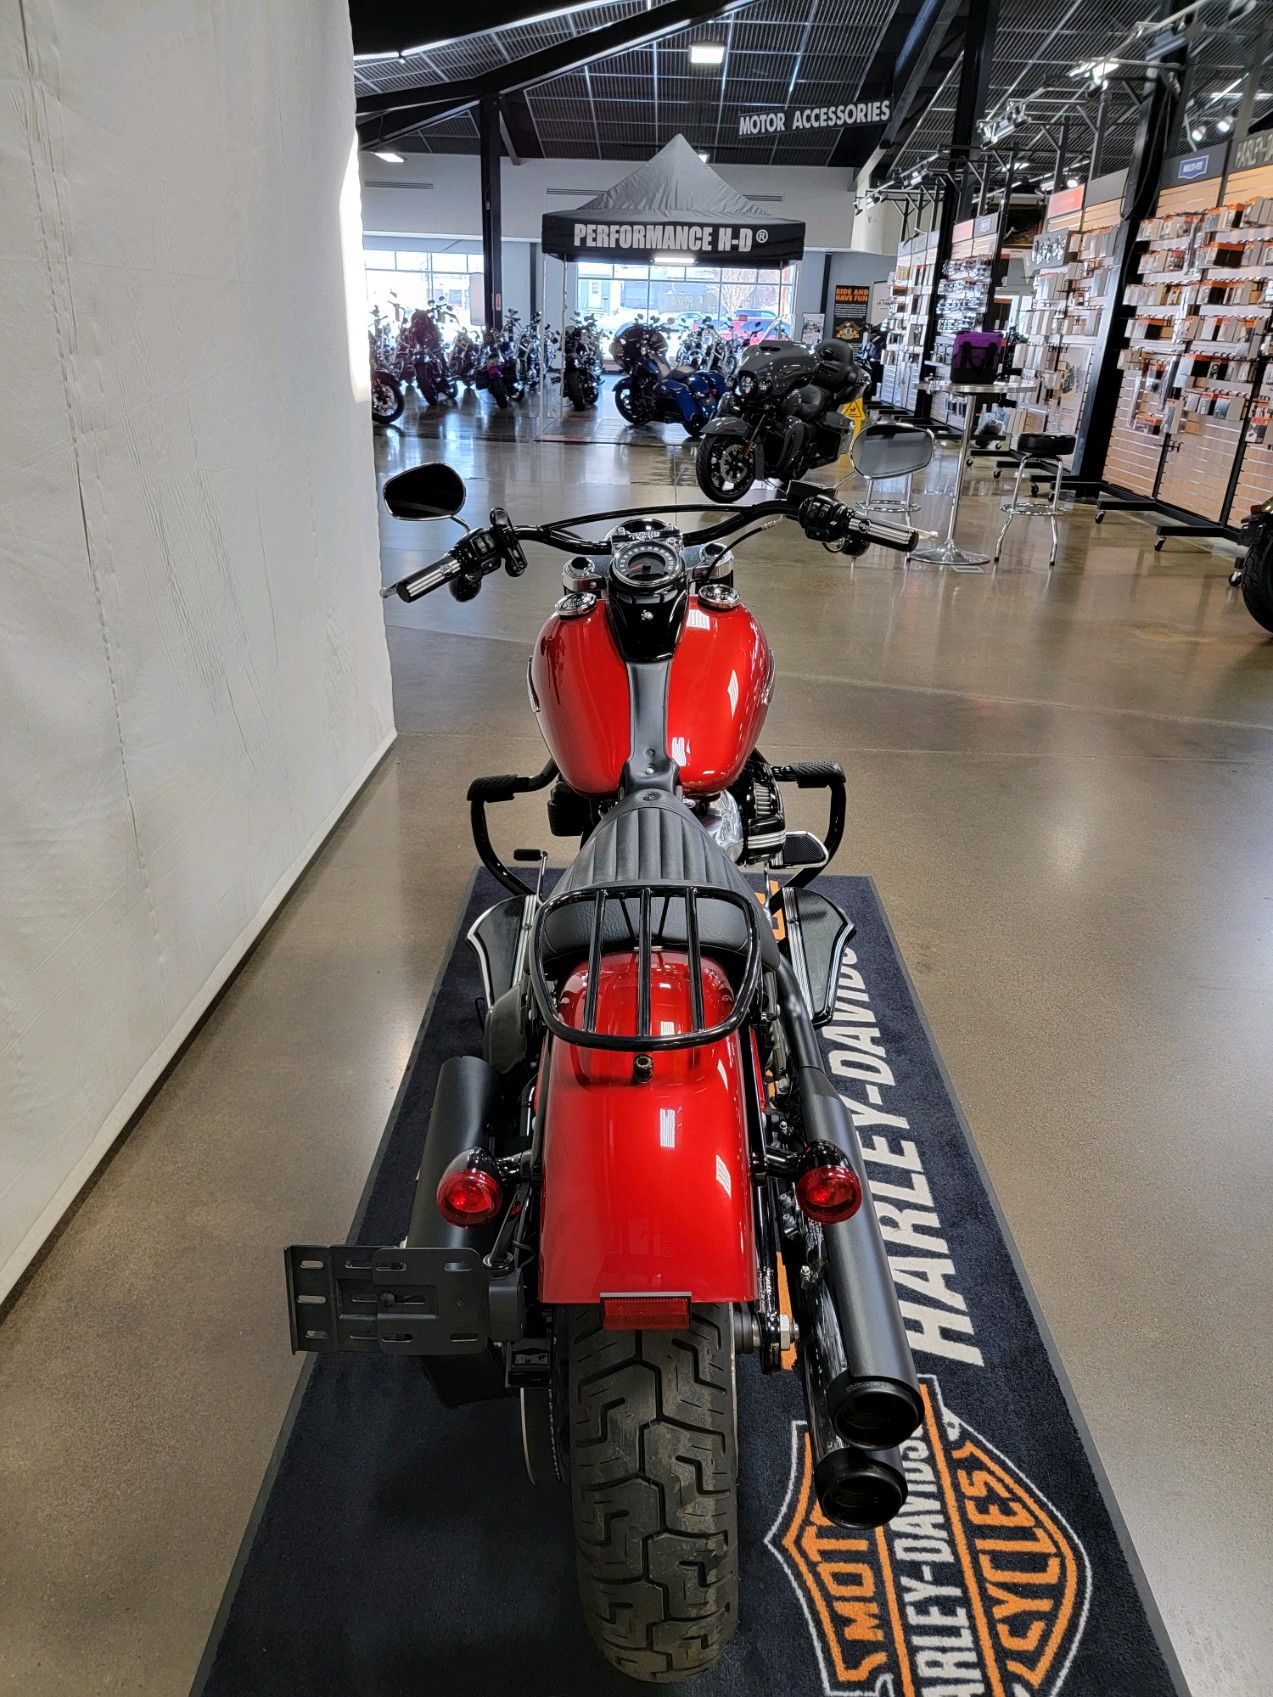 2018 Harley-Davidson Softail Slim® 107 in Syracuse, New York - Photo 4